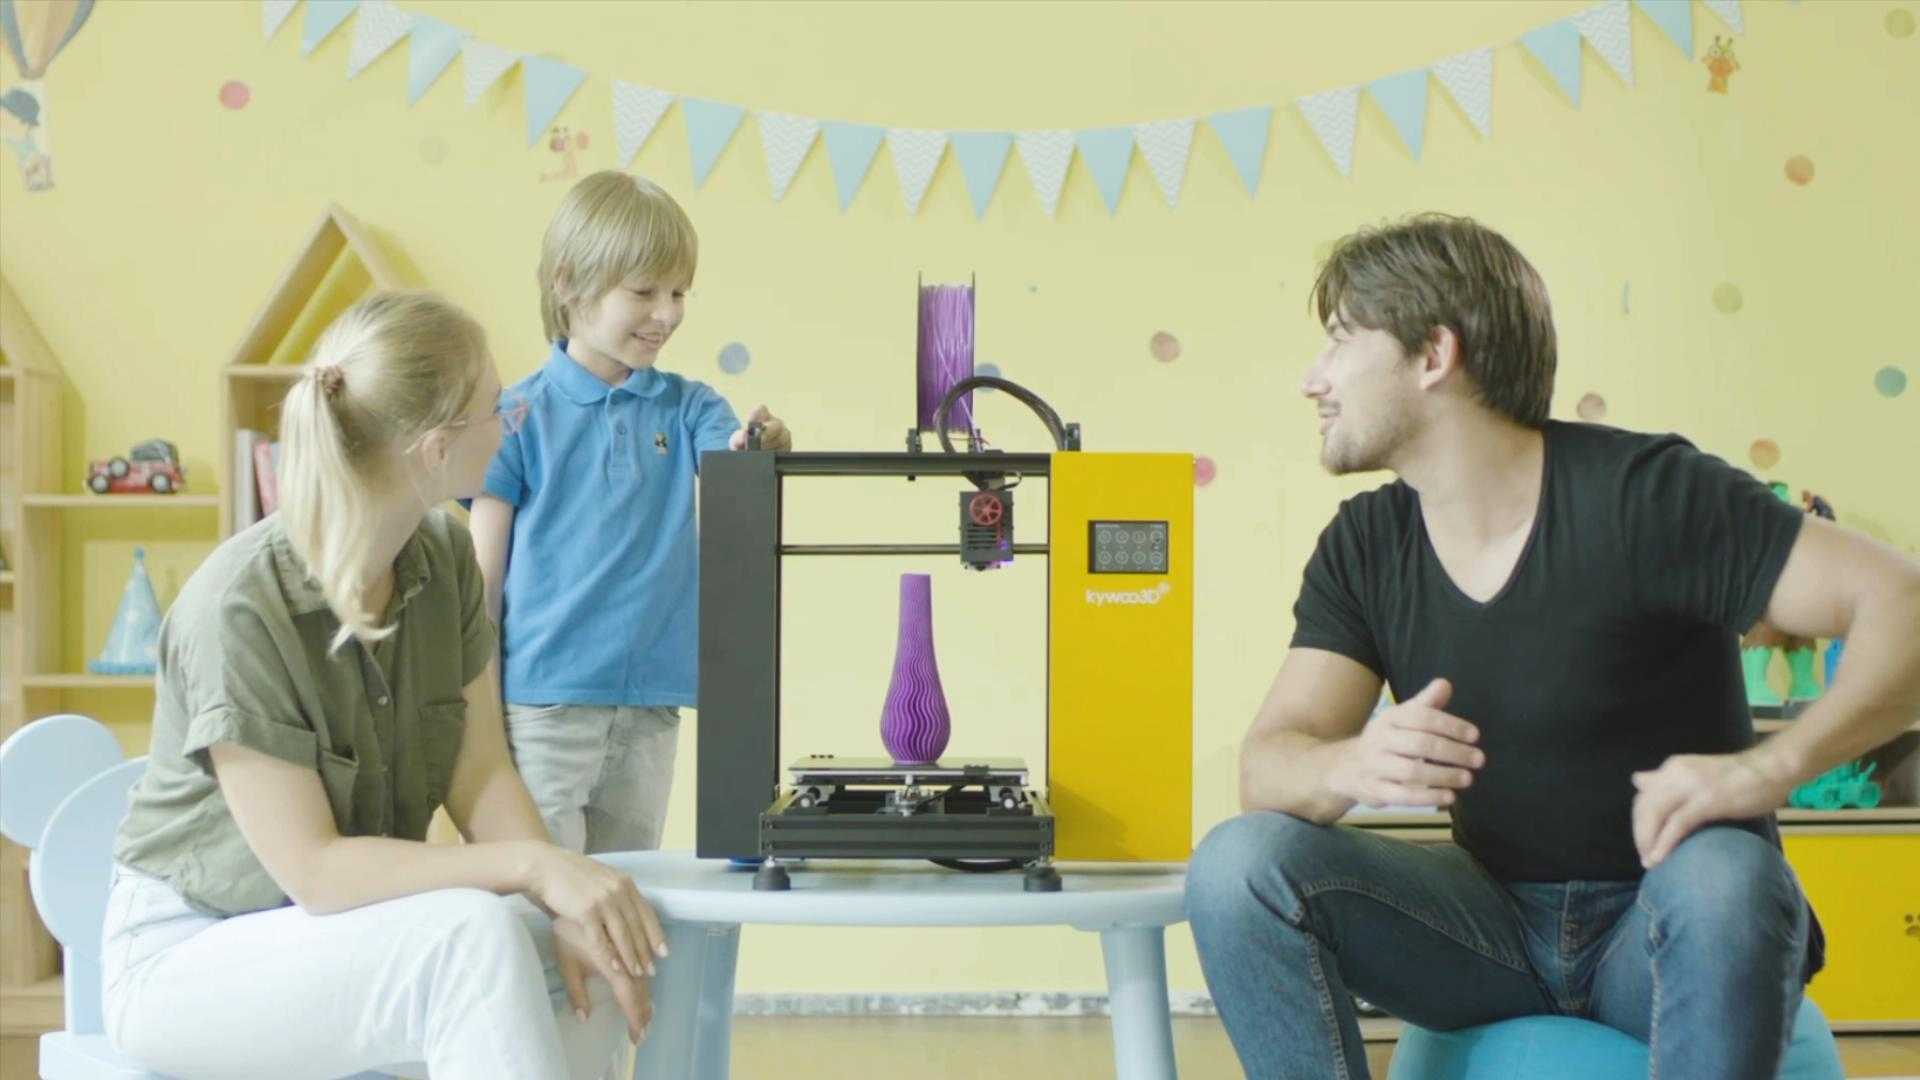 Tycoon Kywoo 3D printer